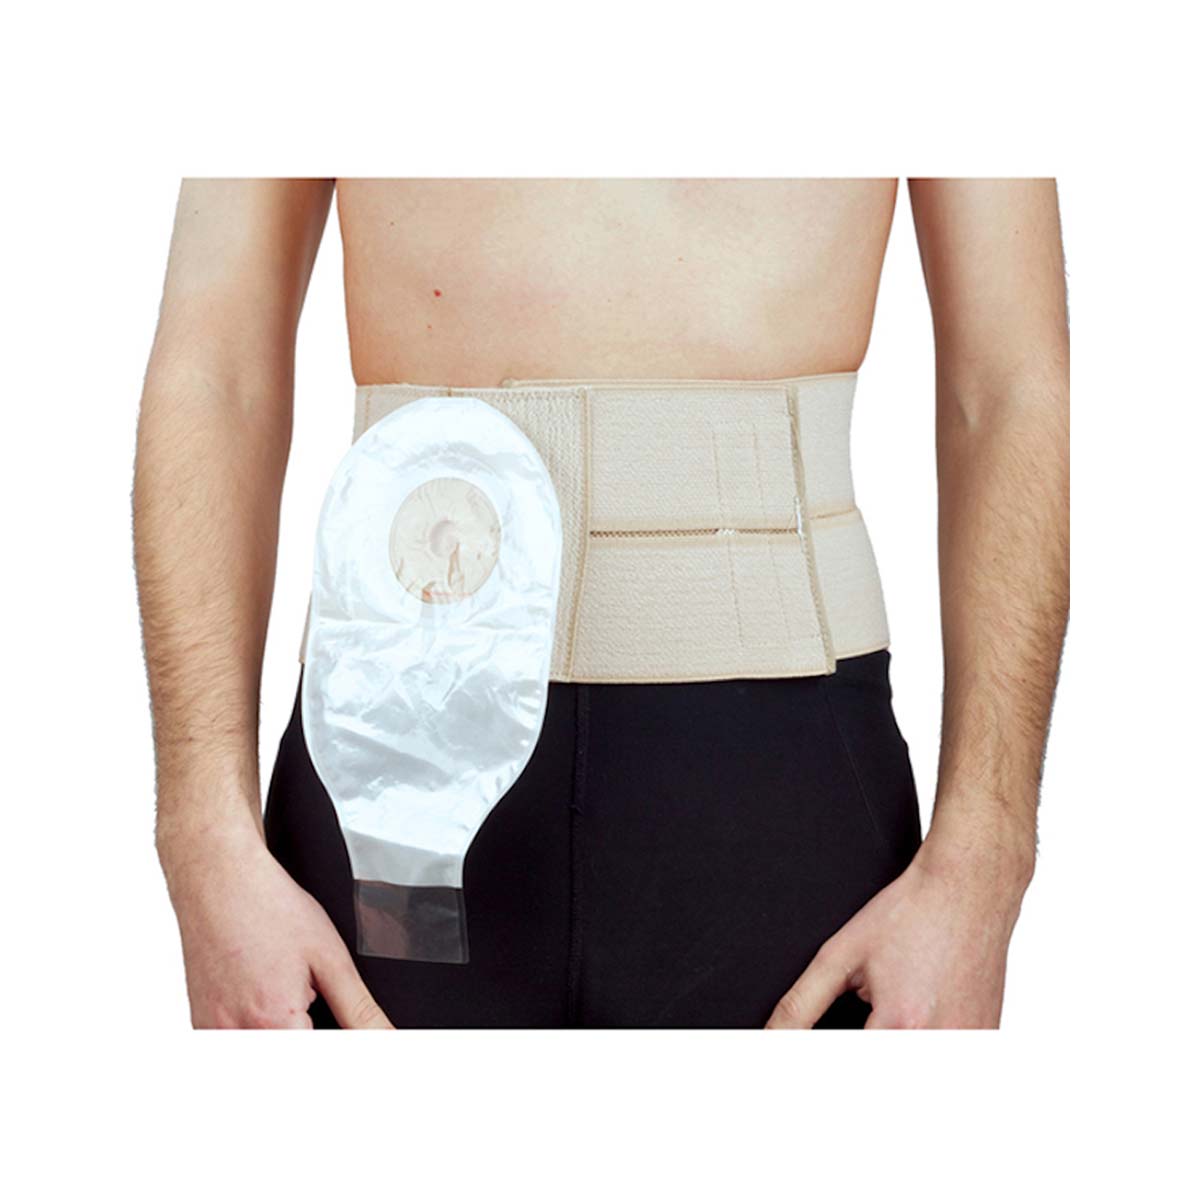 Cinturon para bolsa de colostomia, cuenta con un orificio para fijar la bolsa de colostomia